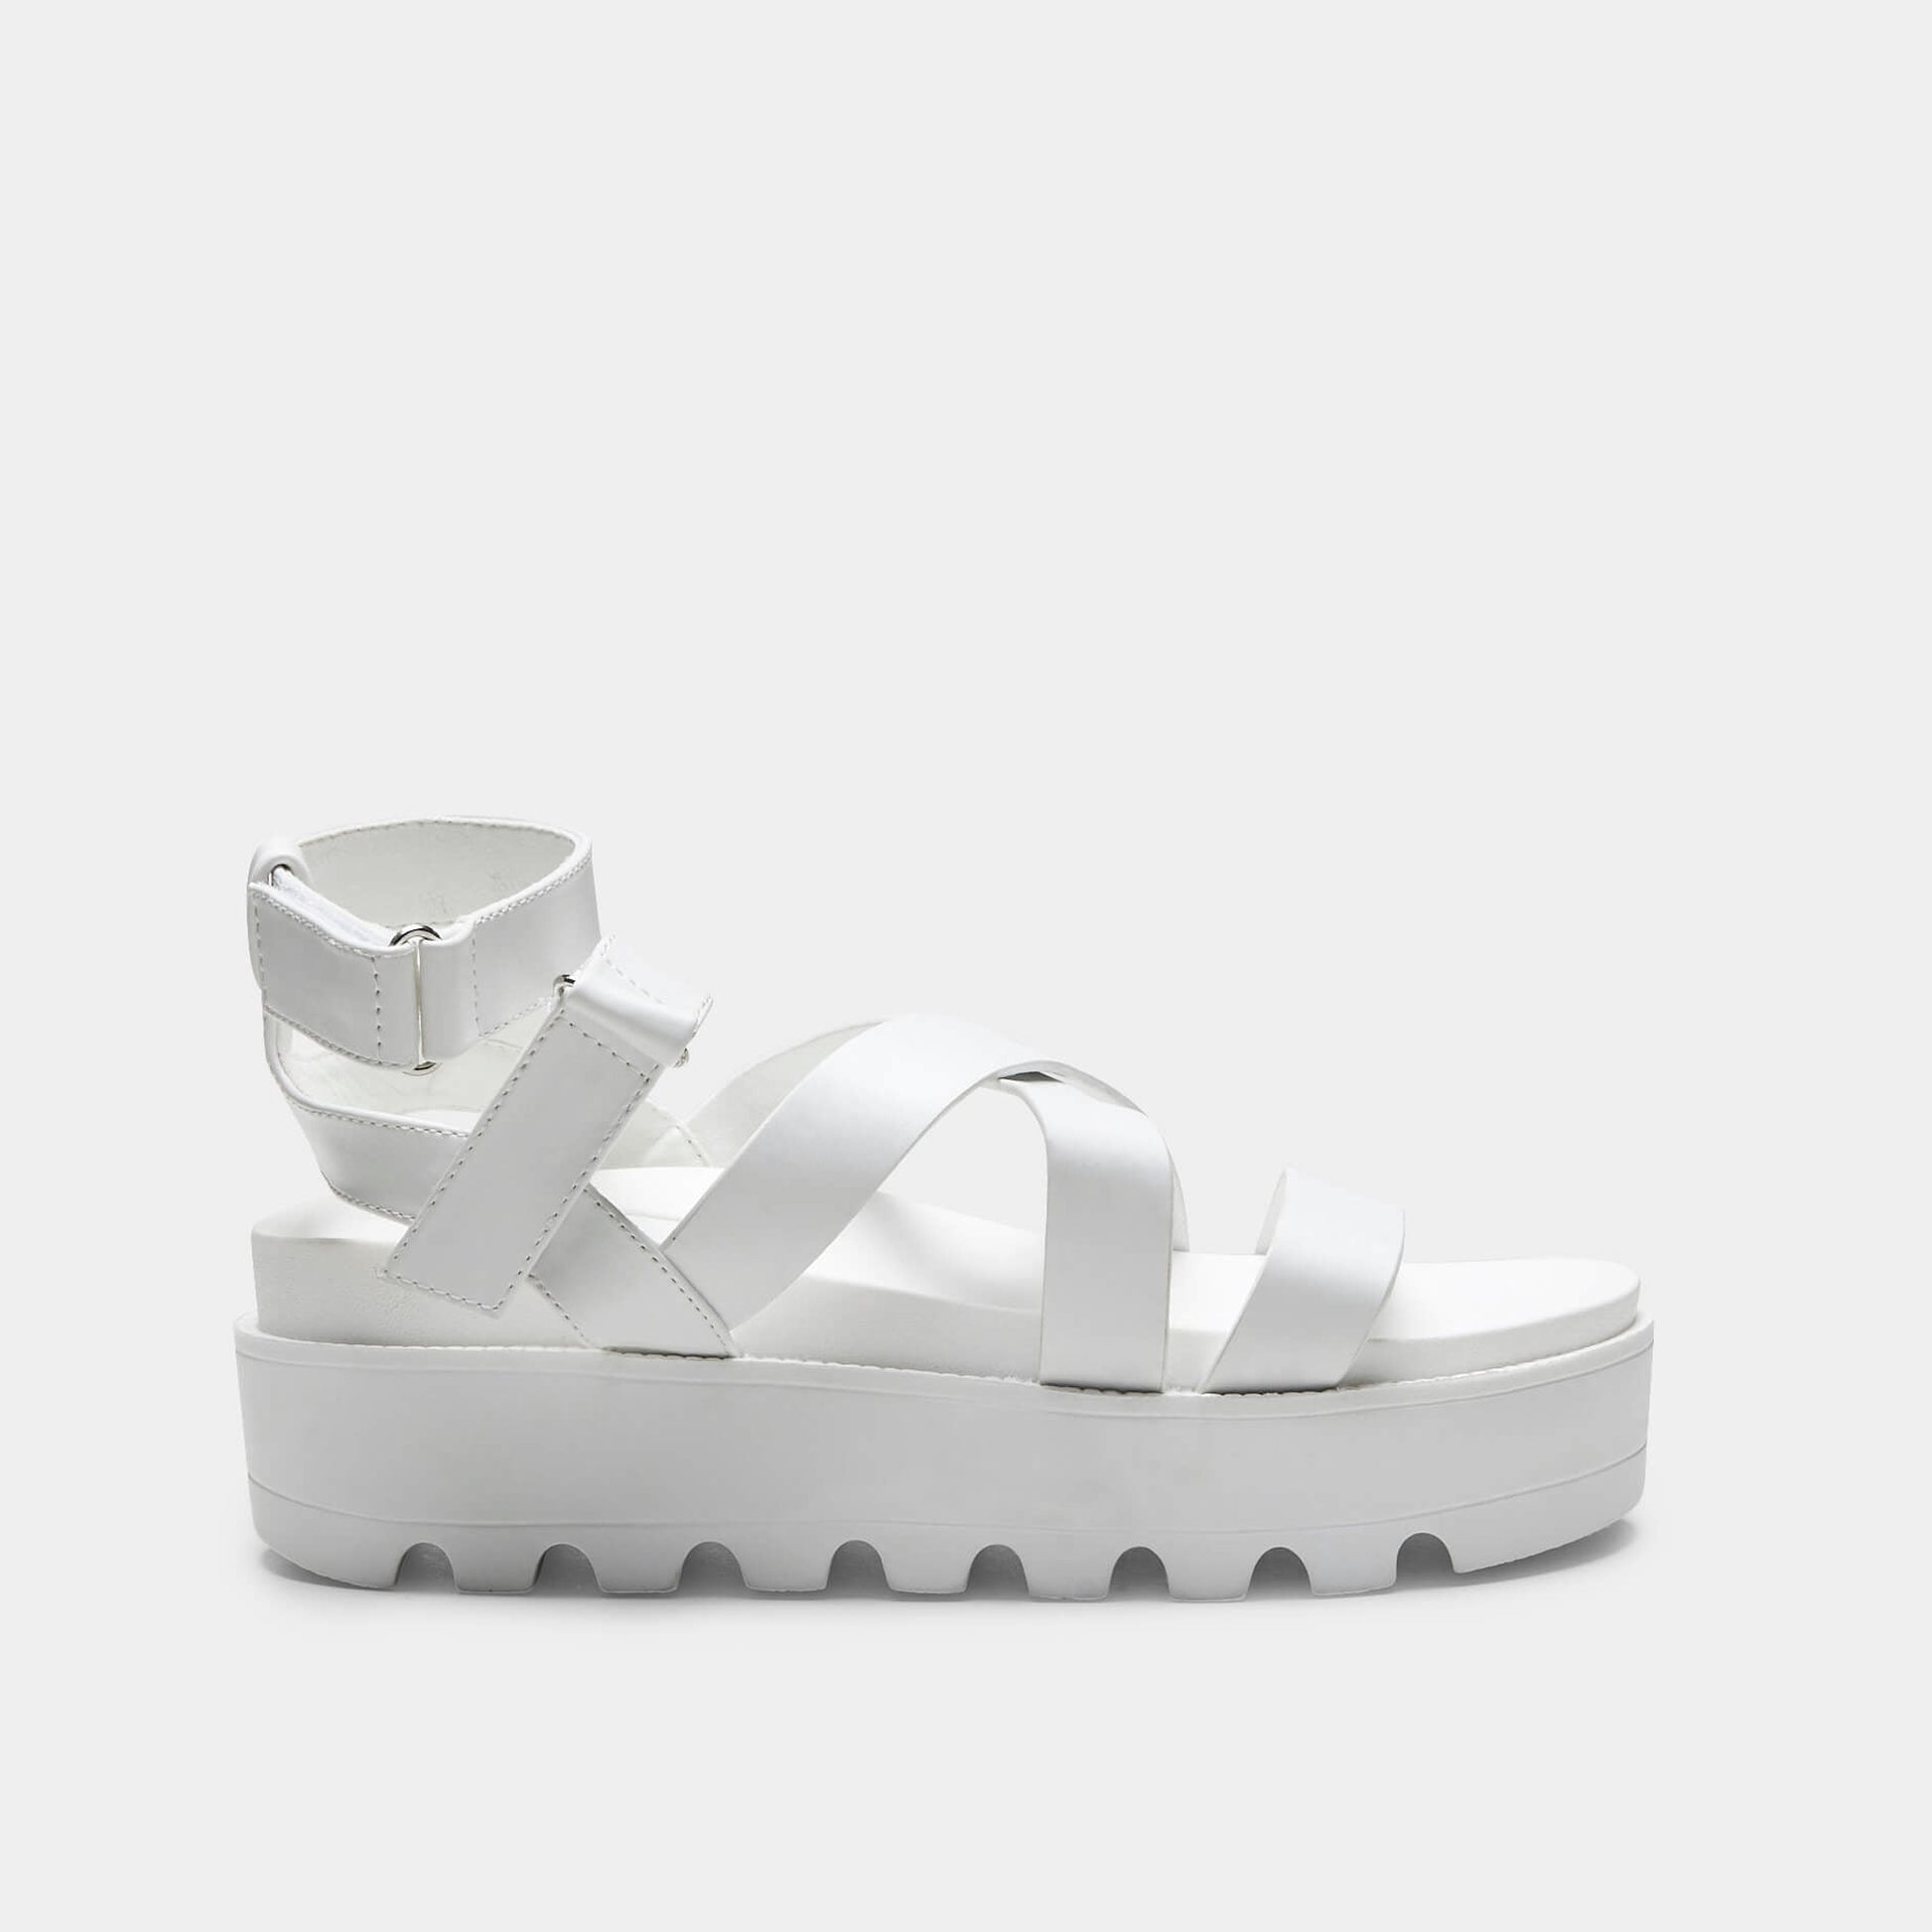 CRIX White Chunky Flatform Sandals - Sandals - KOI Footwear - White - Side View